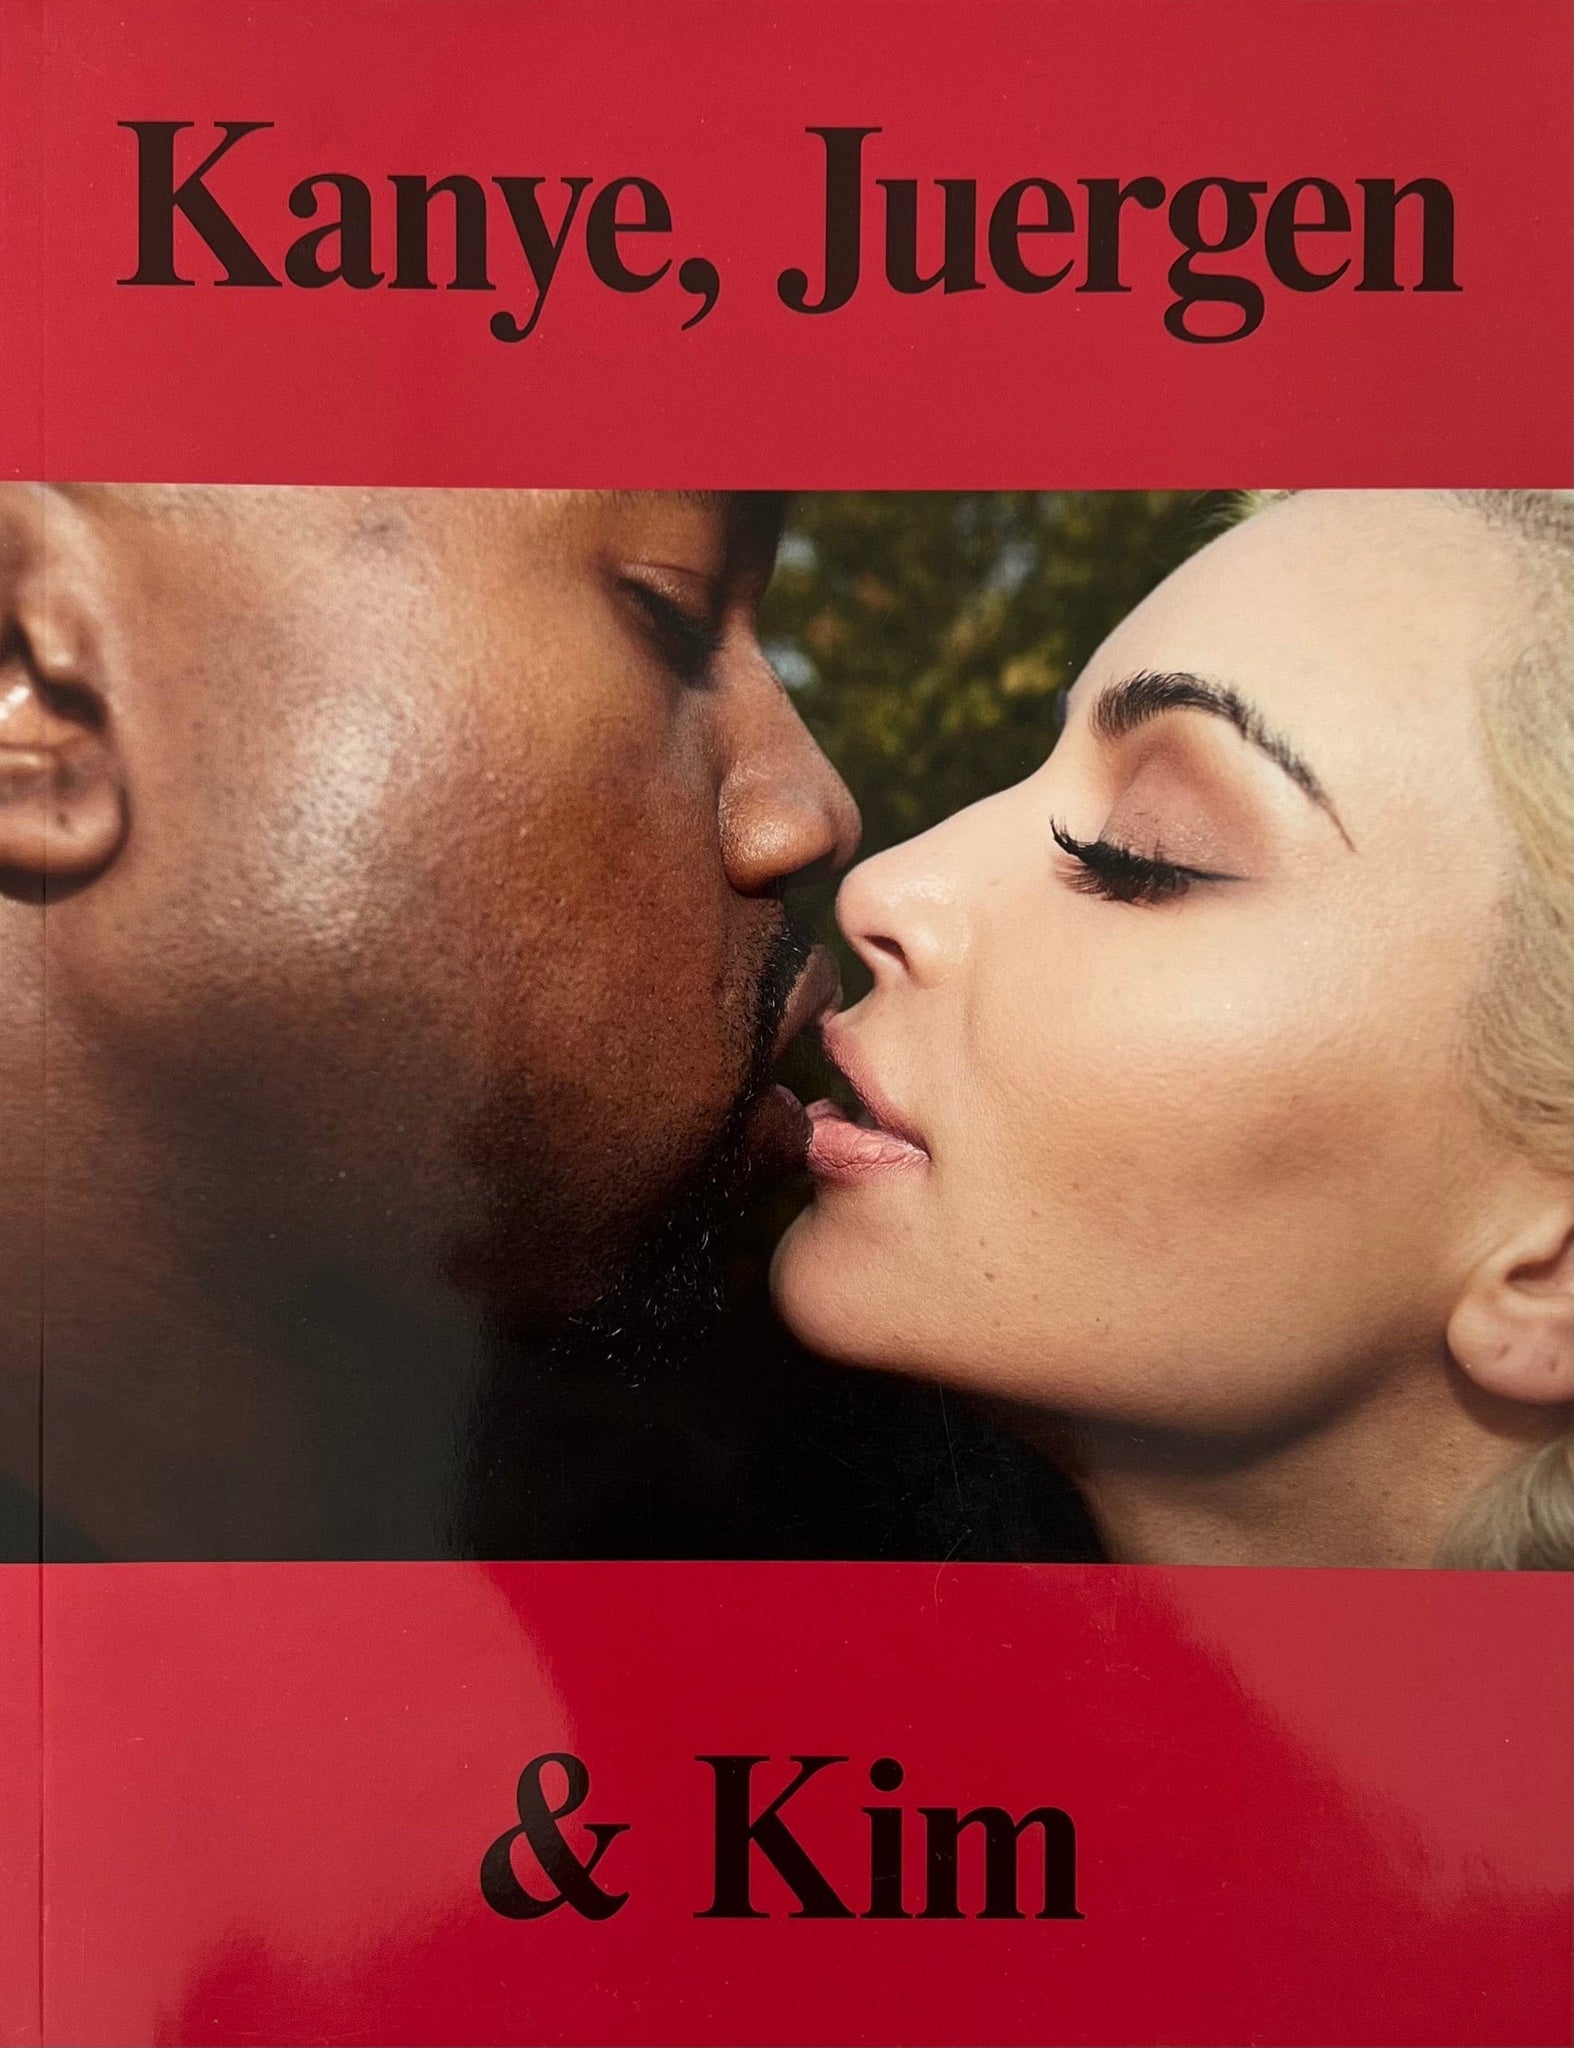 Kanye, Jeurgen & Kim - 2015